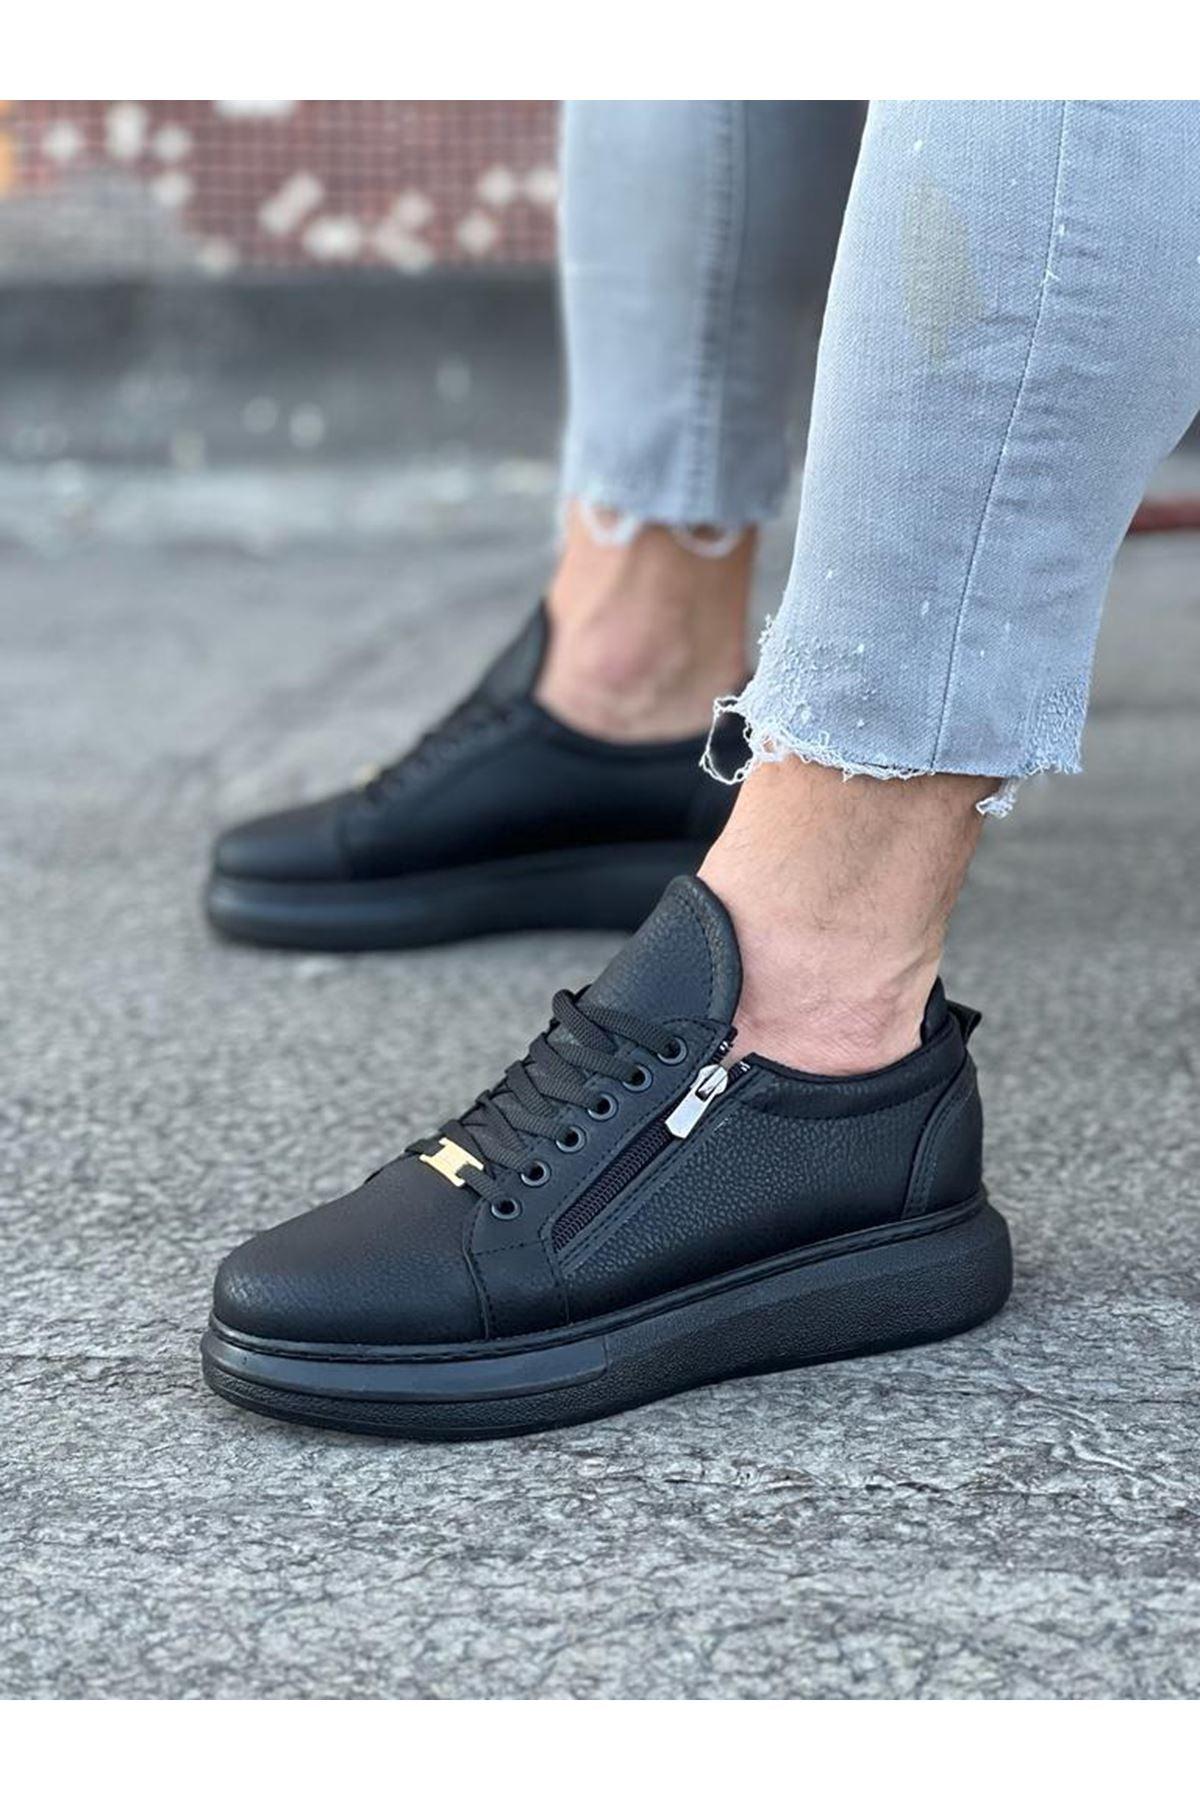 WG504 Black Men's Casual Shoes sneakers - STREET MODE ™